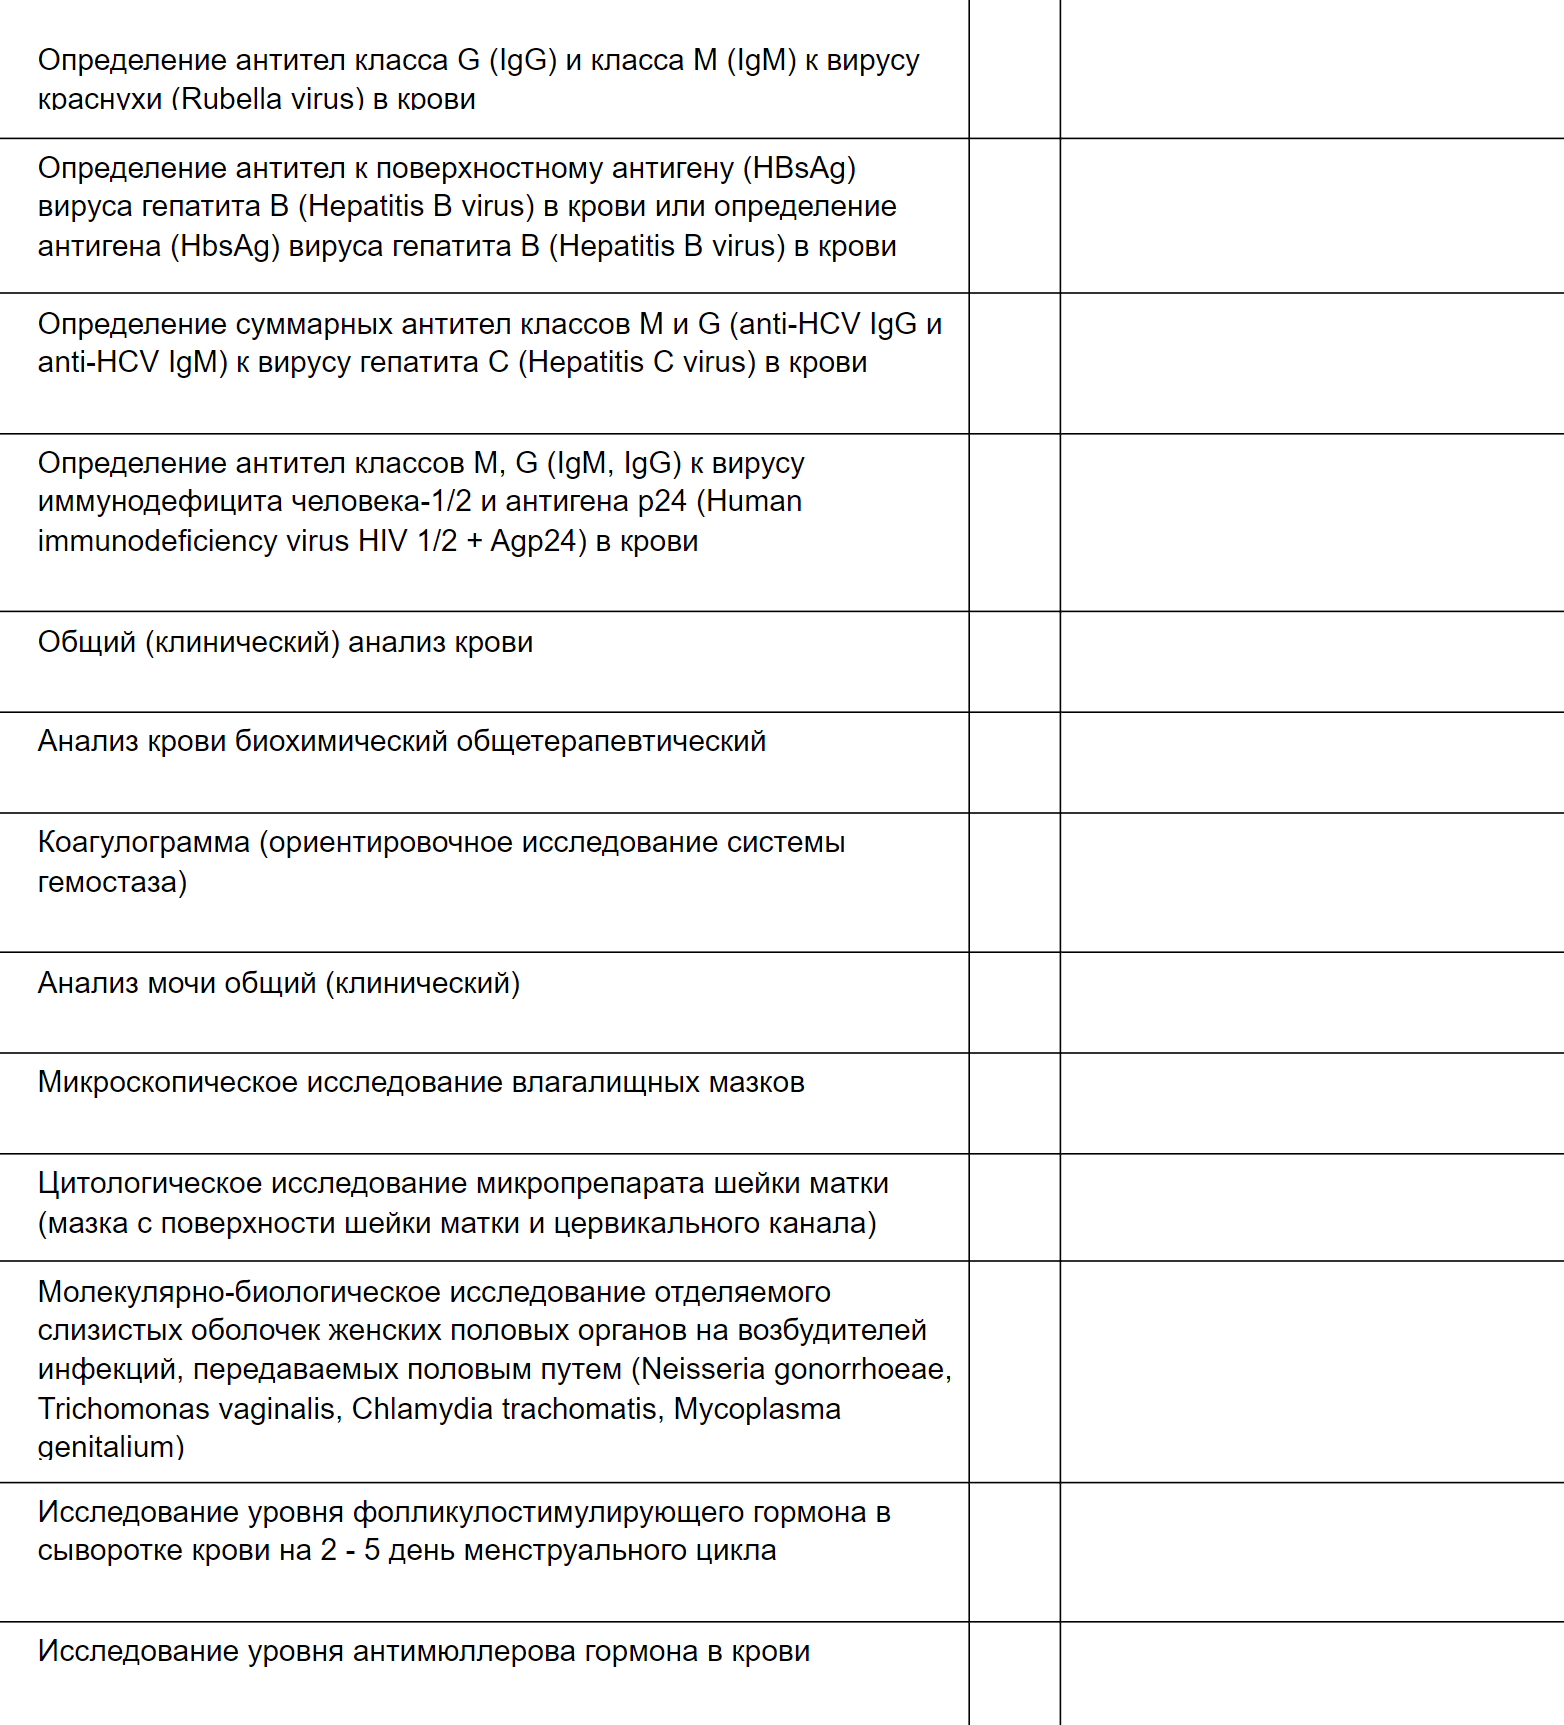 Карта обследований донора ооцитов. Источник: приказ Минздрава РФ от 31.07.2020 № 803н